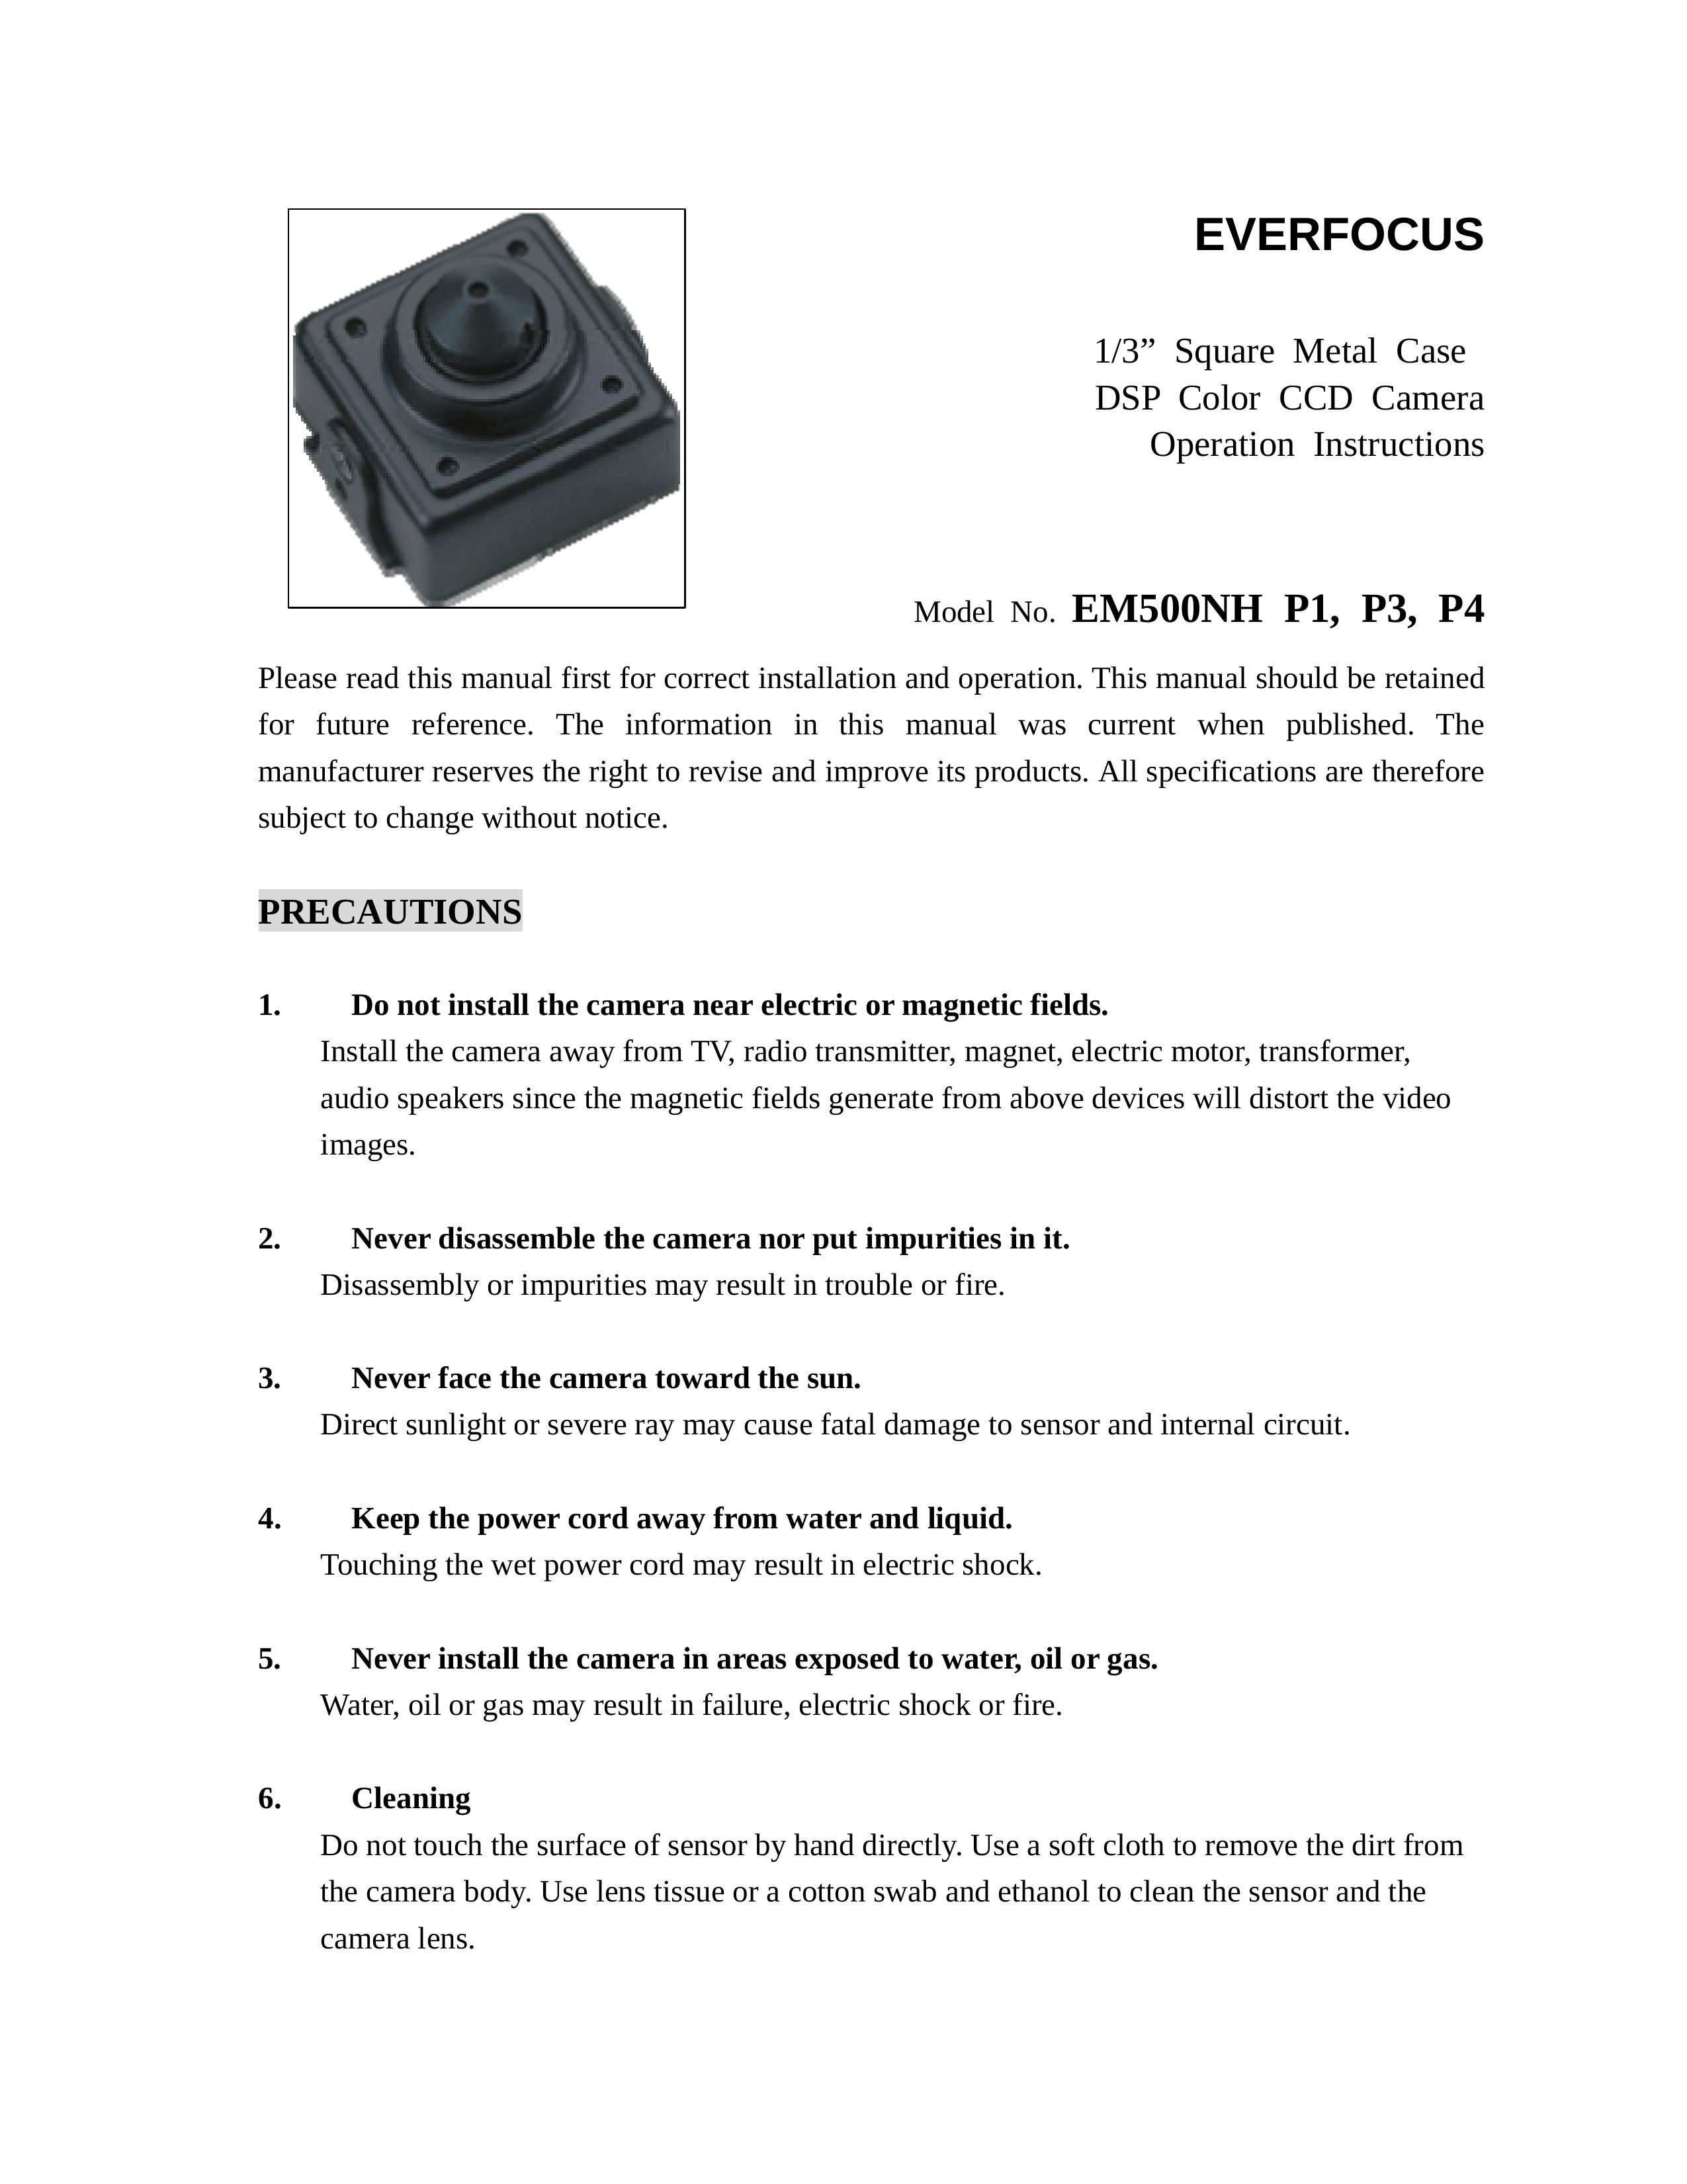 EverFocus EM500NH P2 Digital Camera User Manual